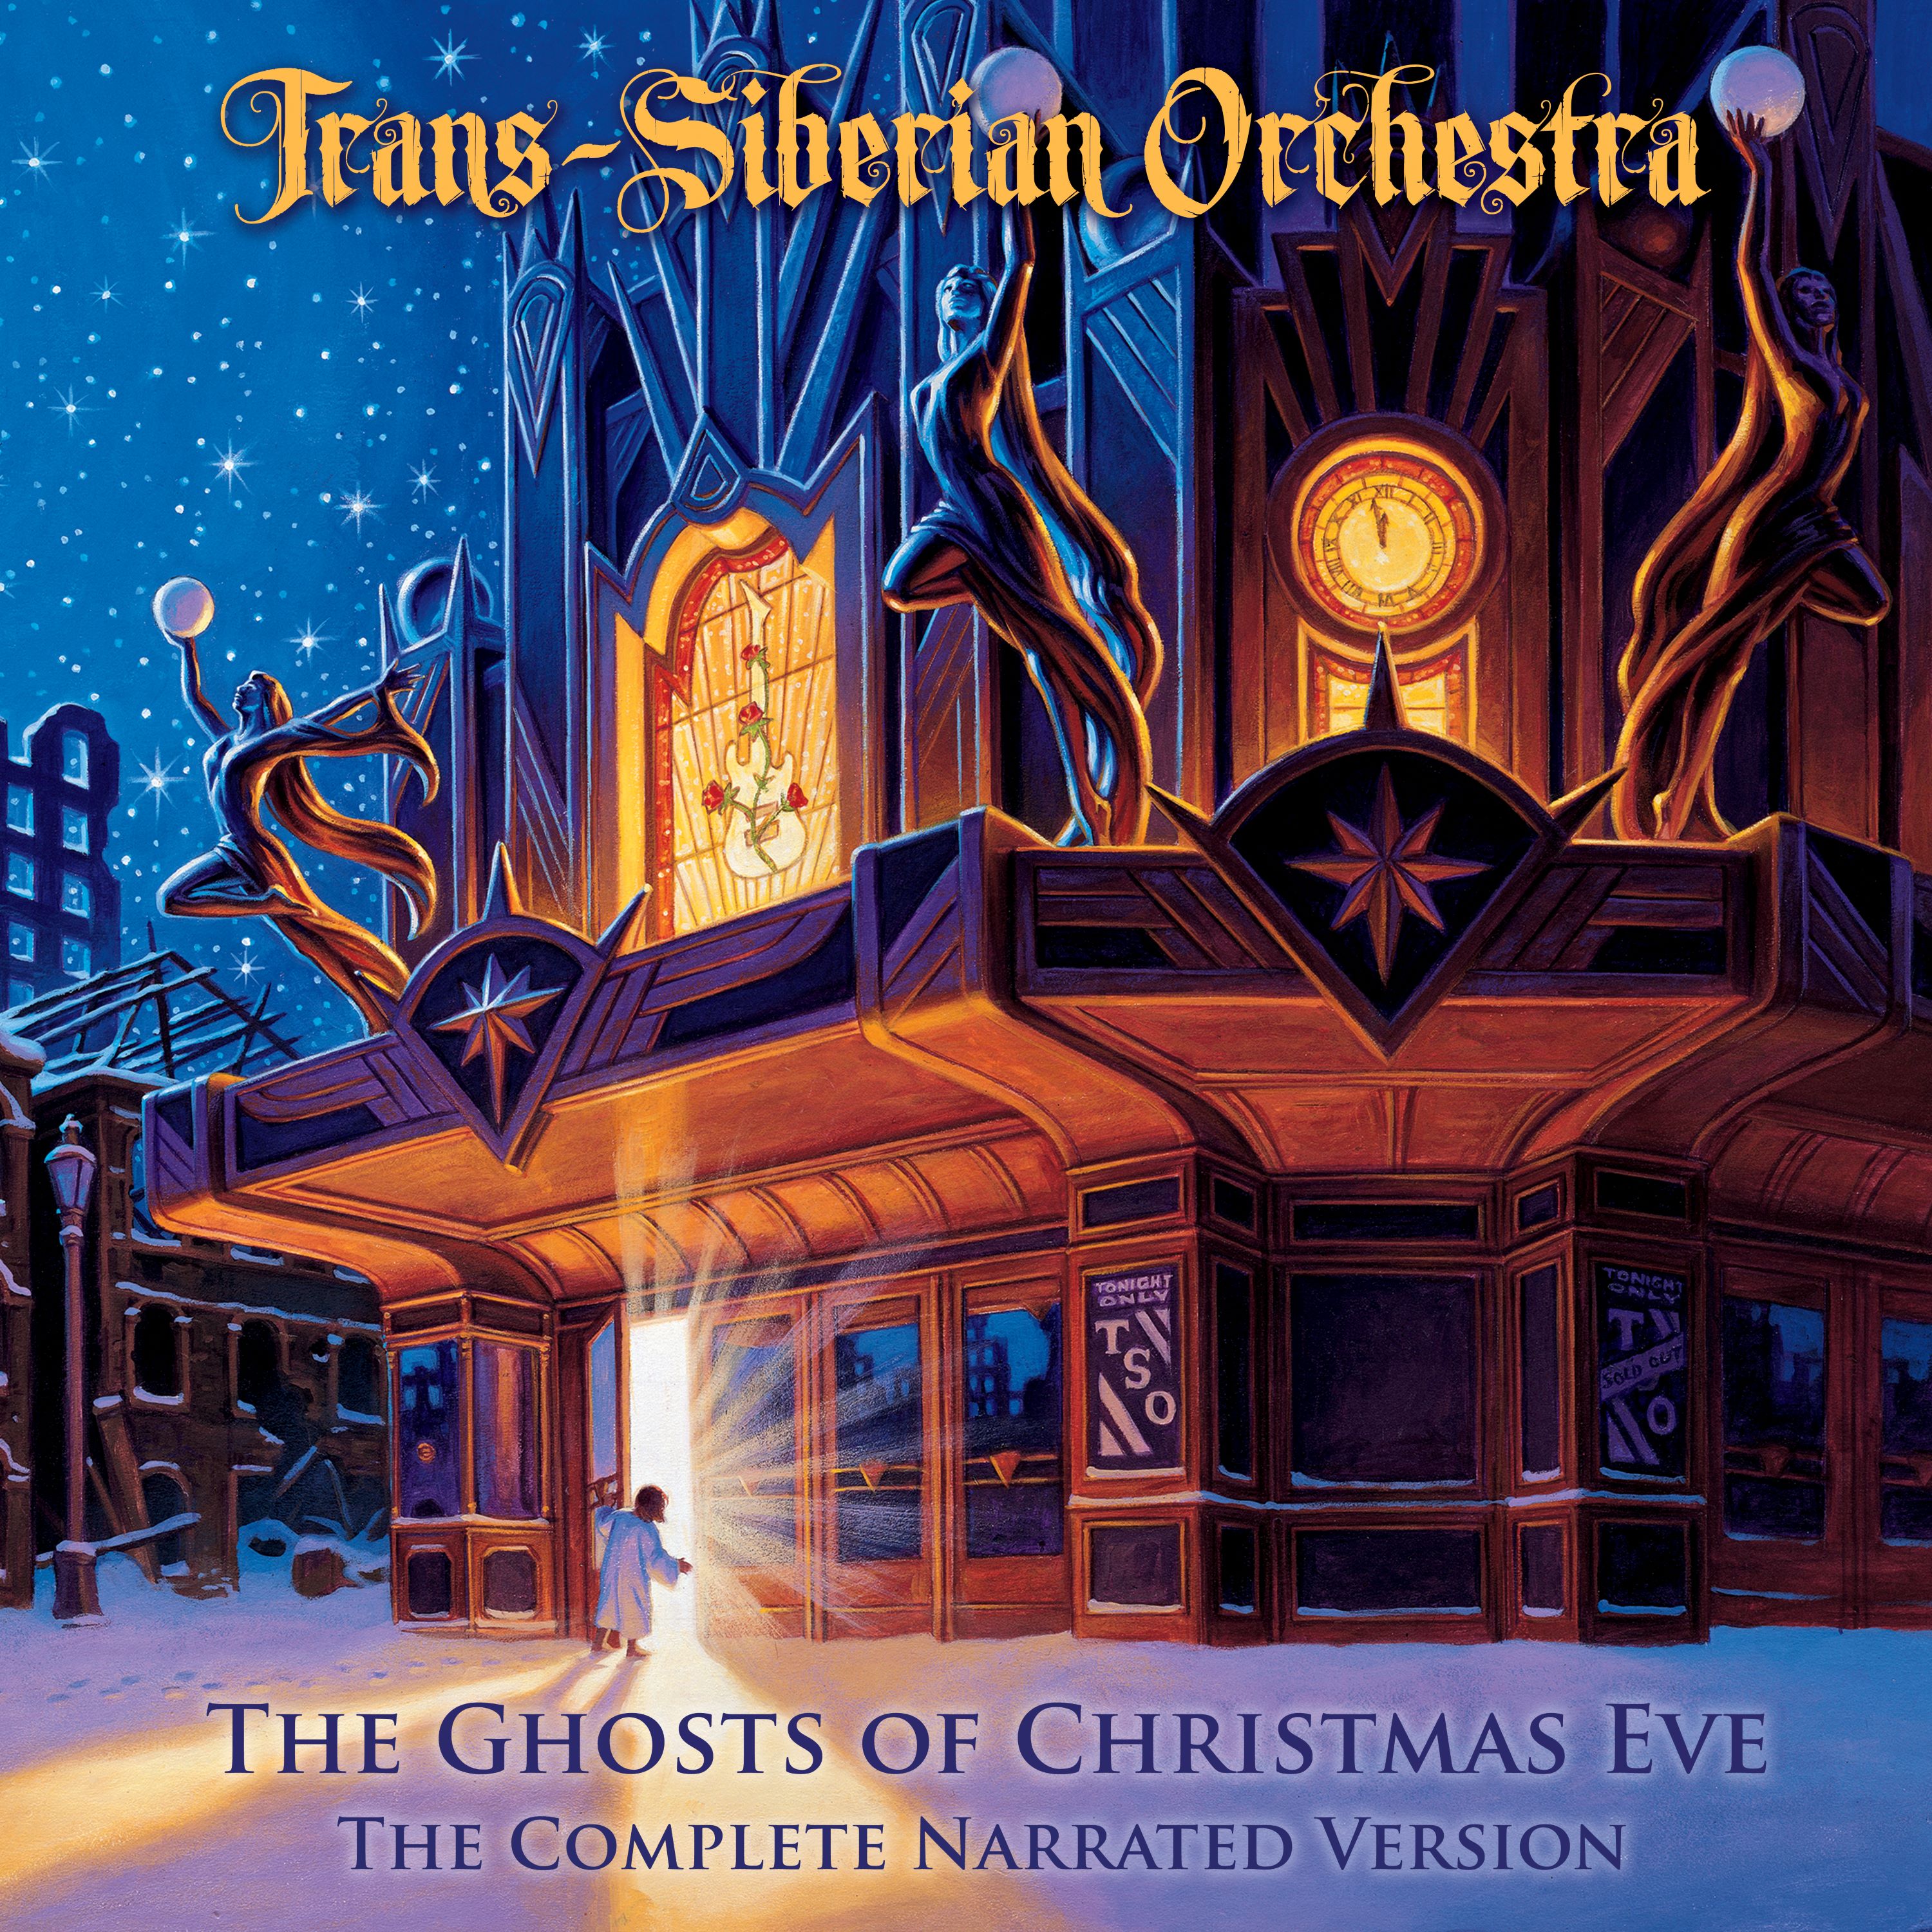 Siberian orchestra. Trans-Siberian Orchestra - Beethoven's last Night. 2001 - Trans-Siberian Orchestra (DVD). Trans Siberian Orchestra Winter. Siberian Rock Orchestra.